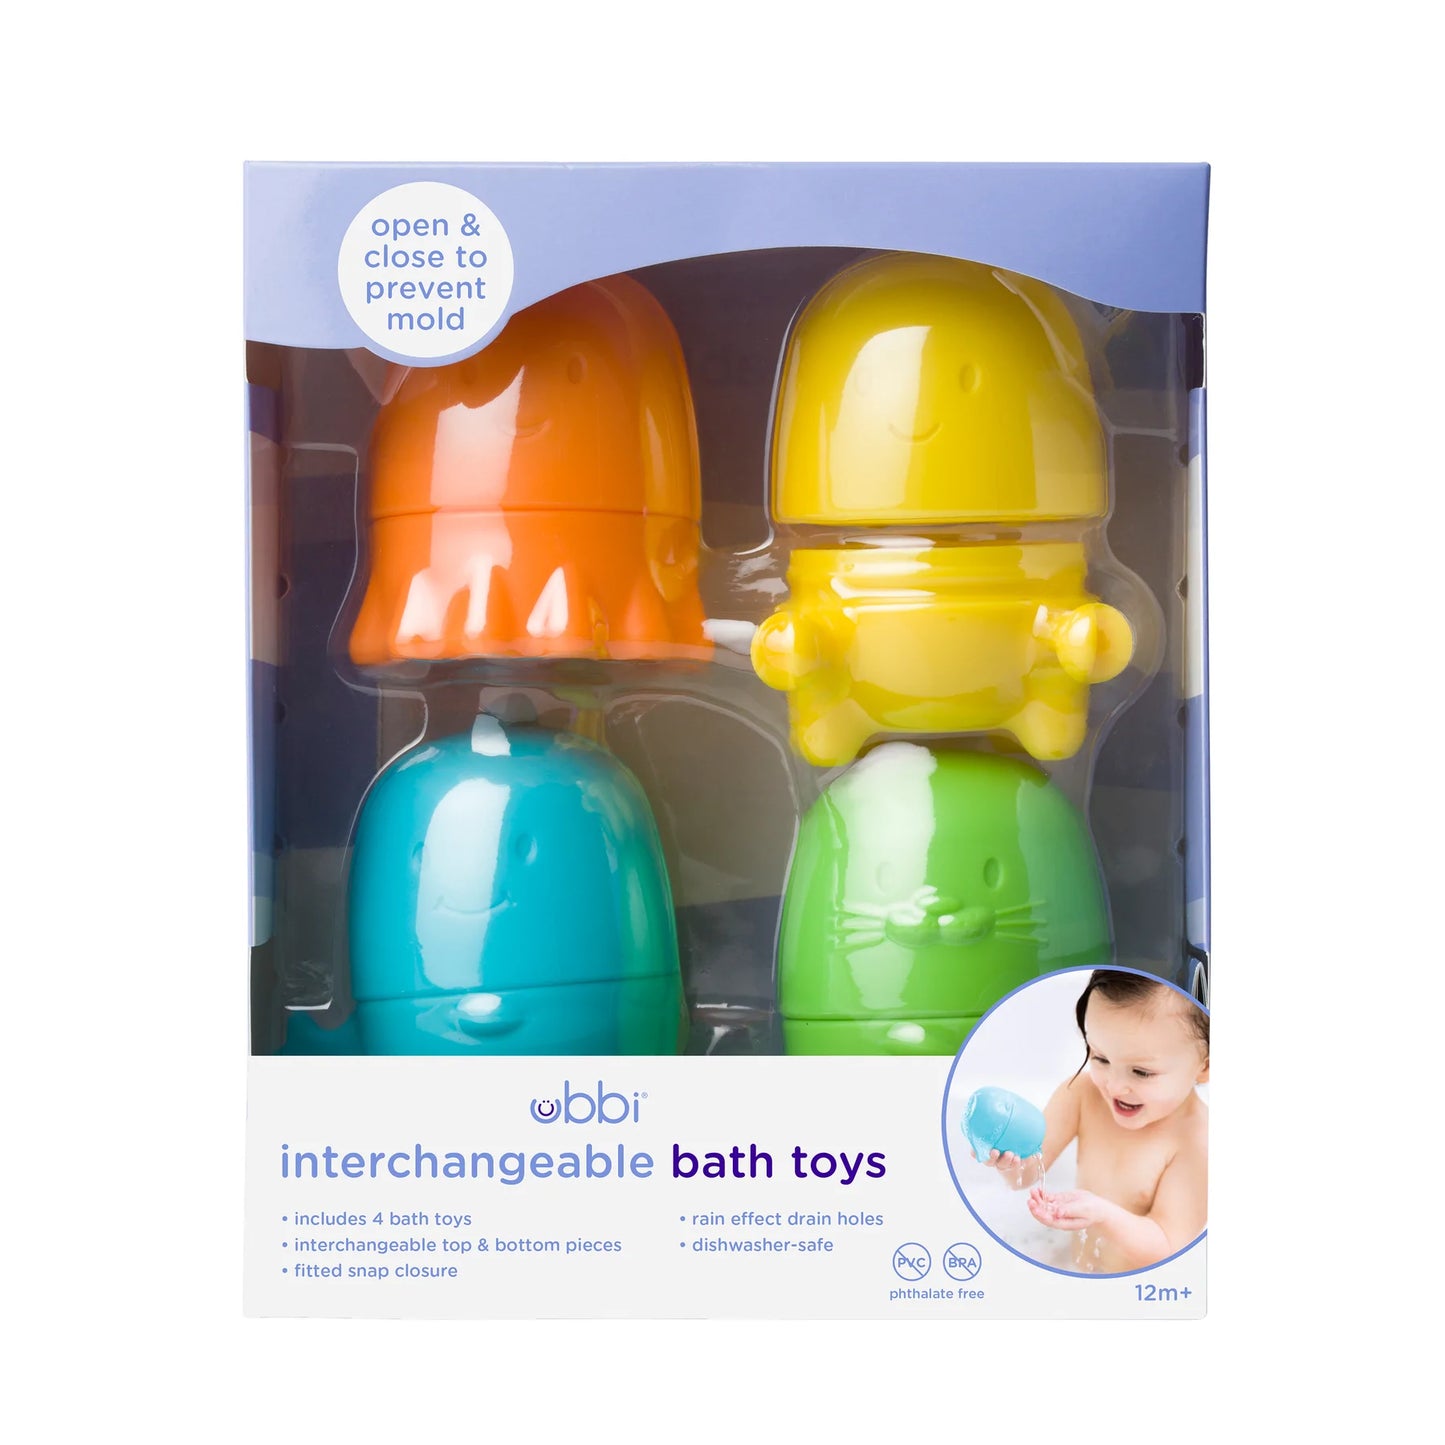 Ubbi interchangeable bath toys